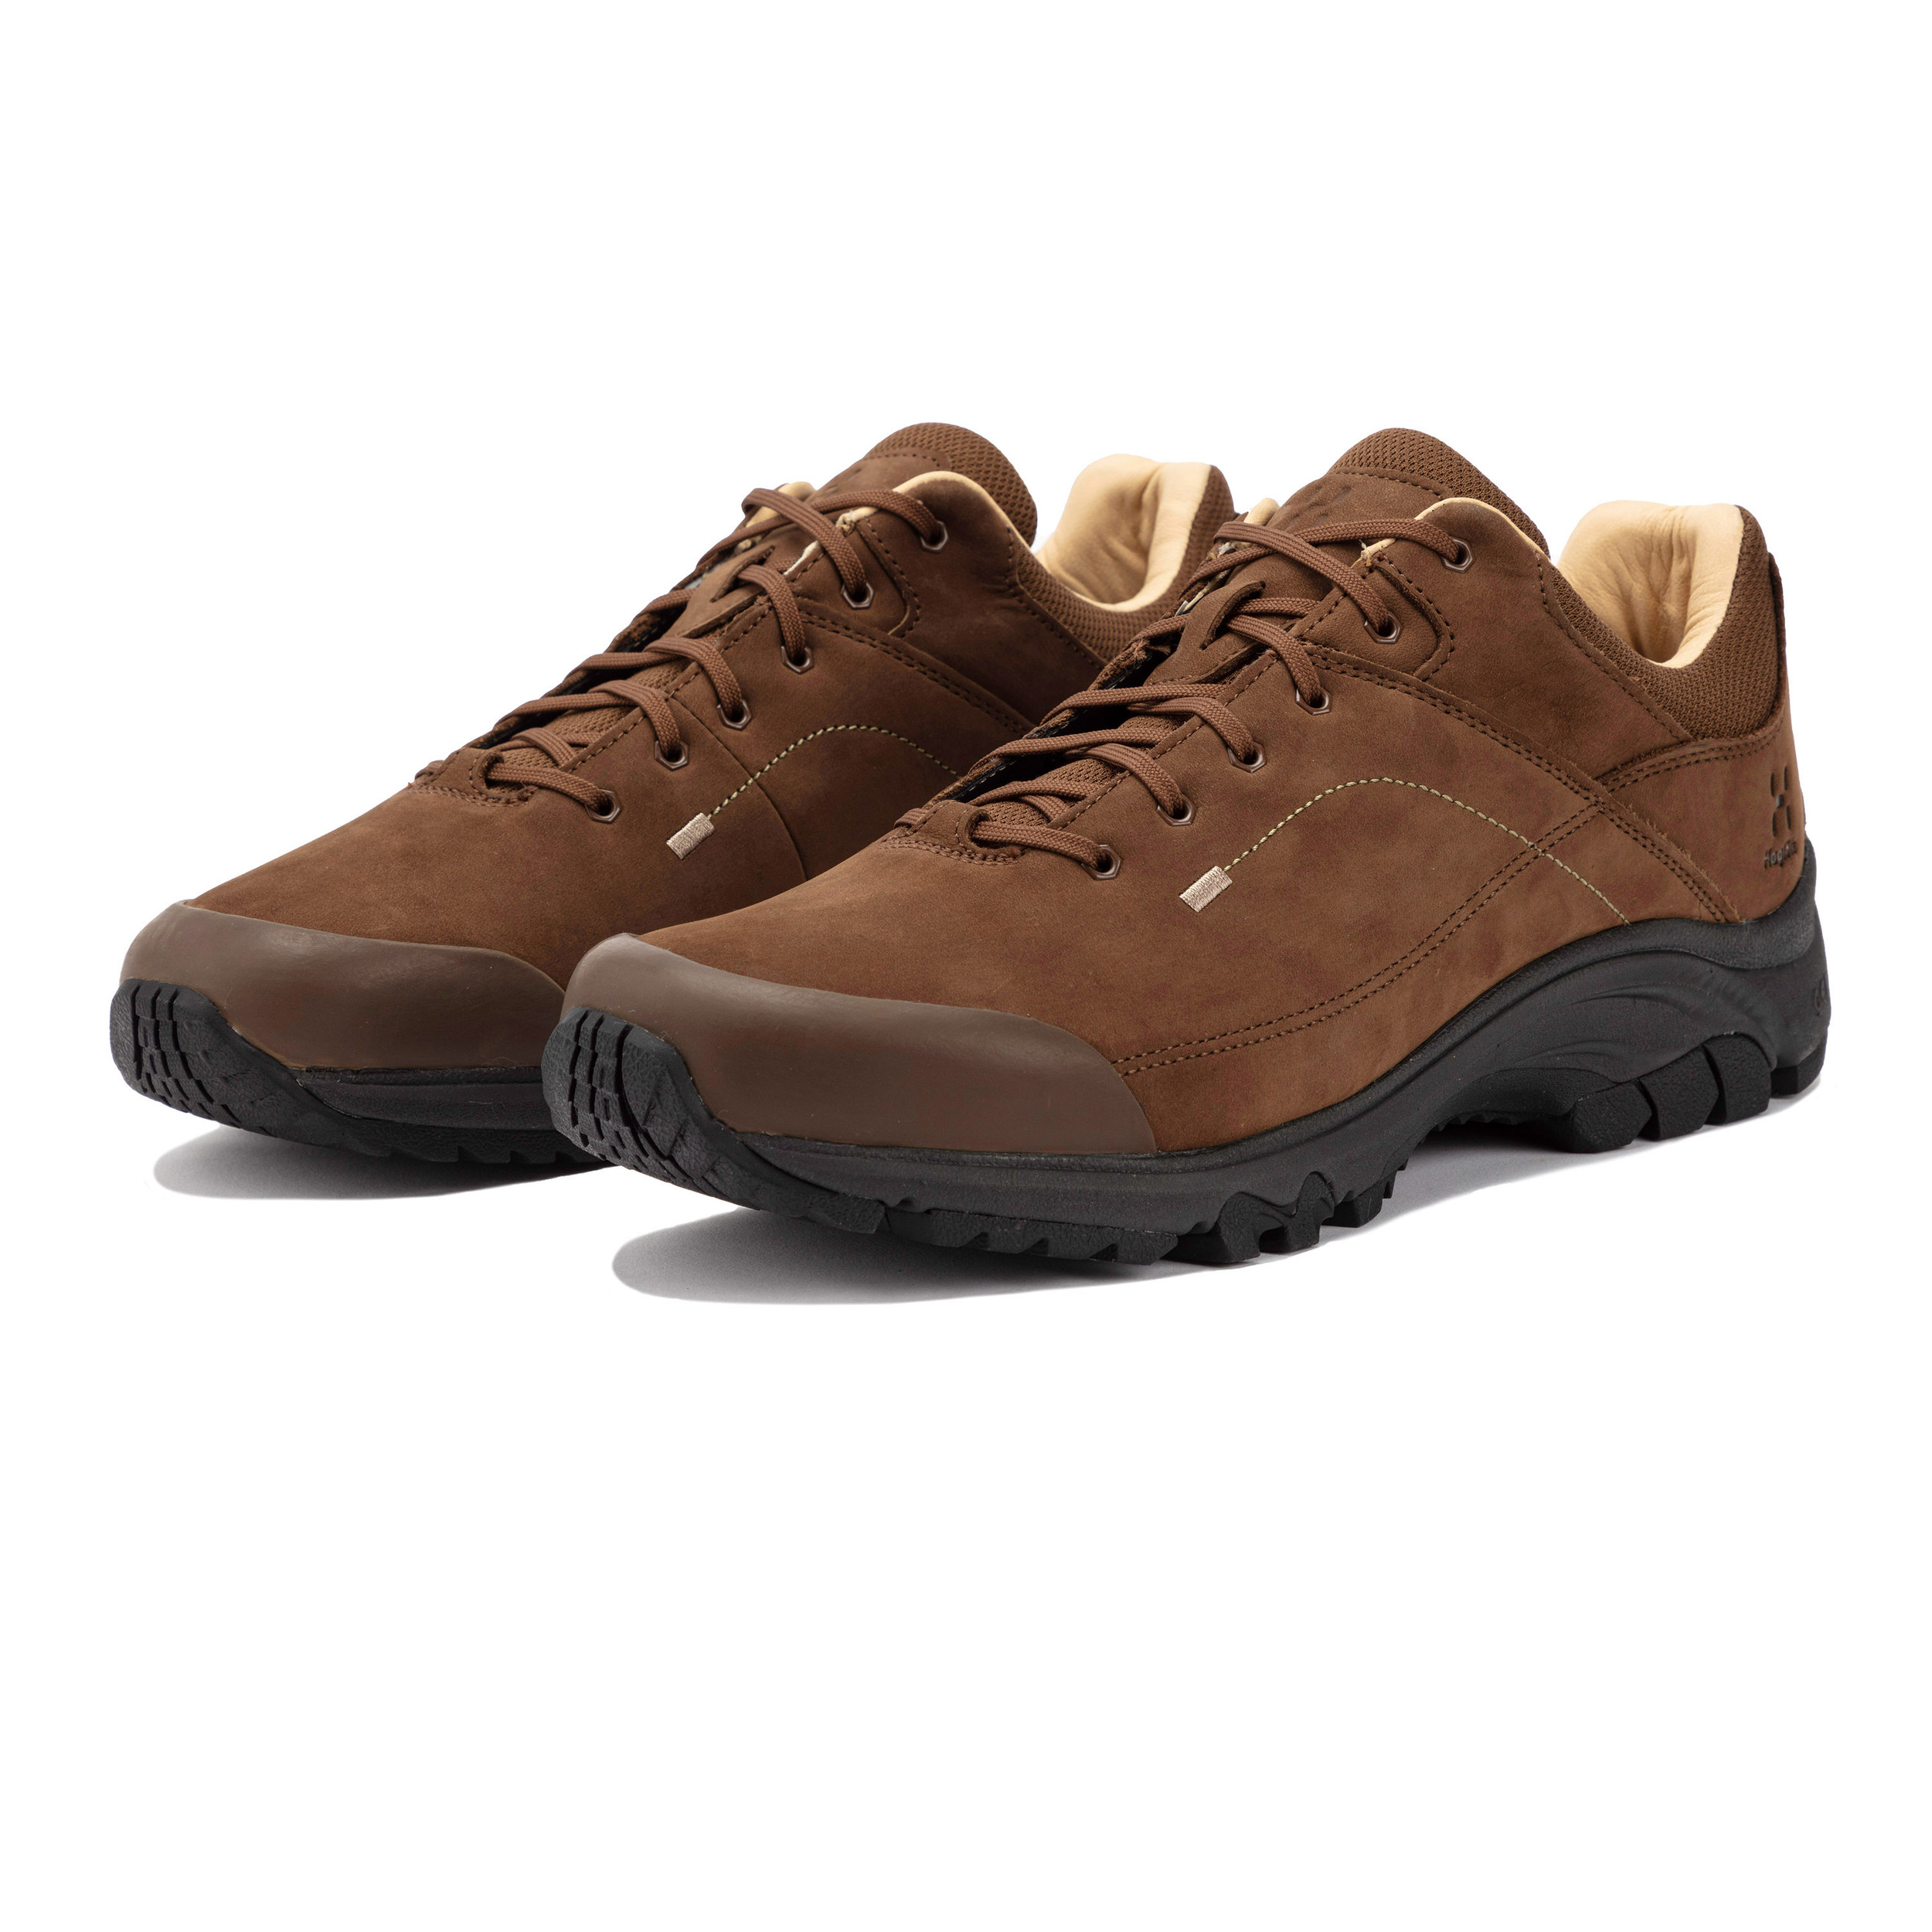 Haglofs Ridge Leather Walking Shoes